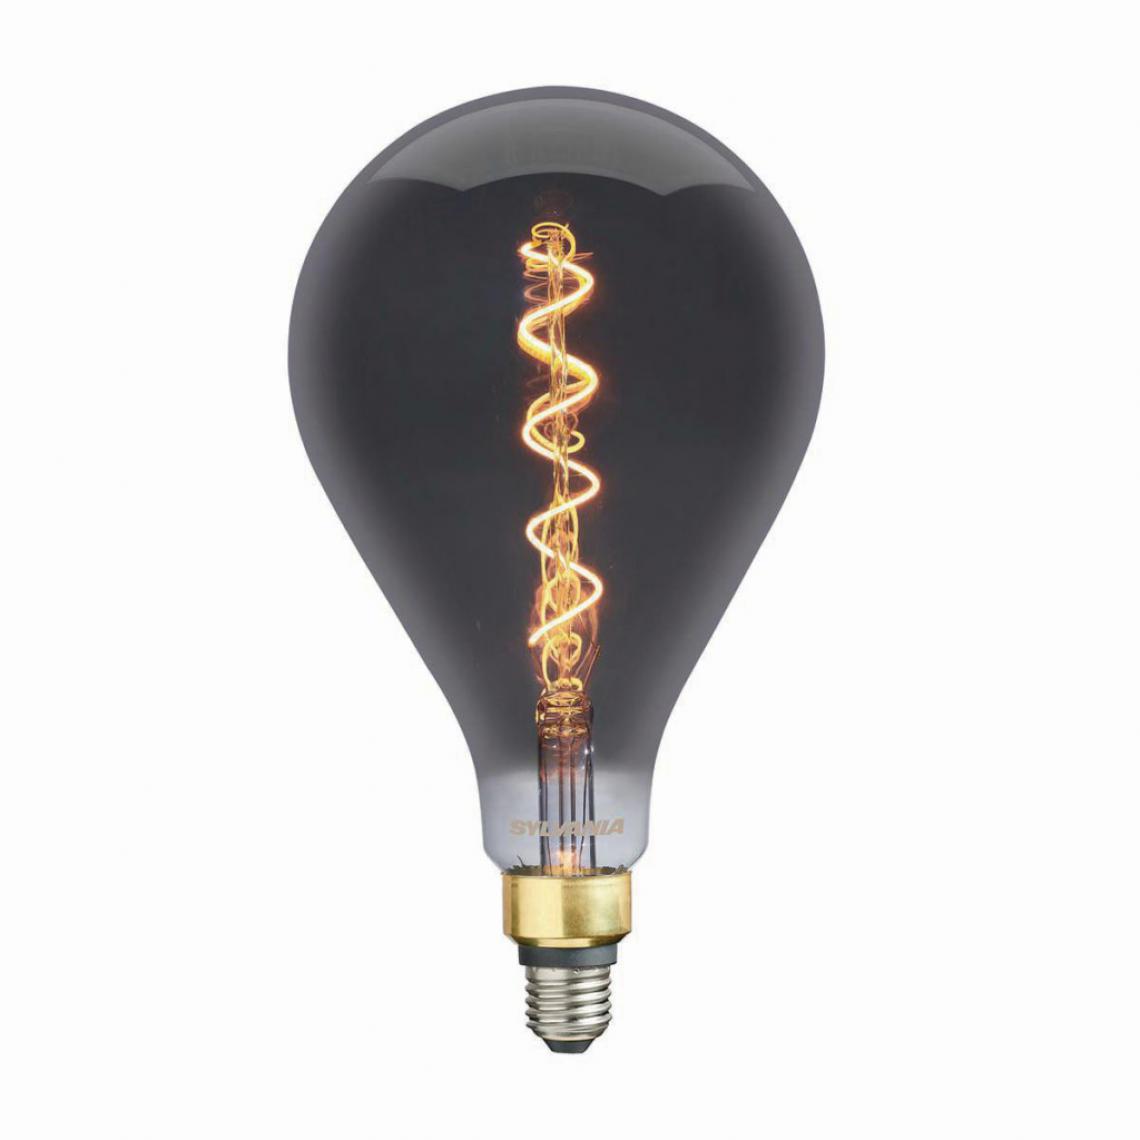 Alpexe - Lampe LED Vintage 5.5 W 105 lm 2000 K - Ampoules LED